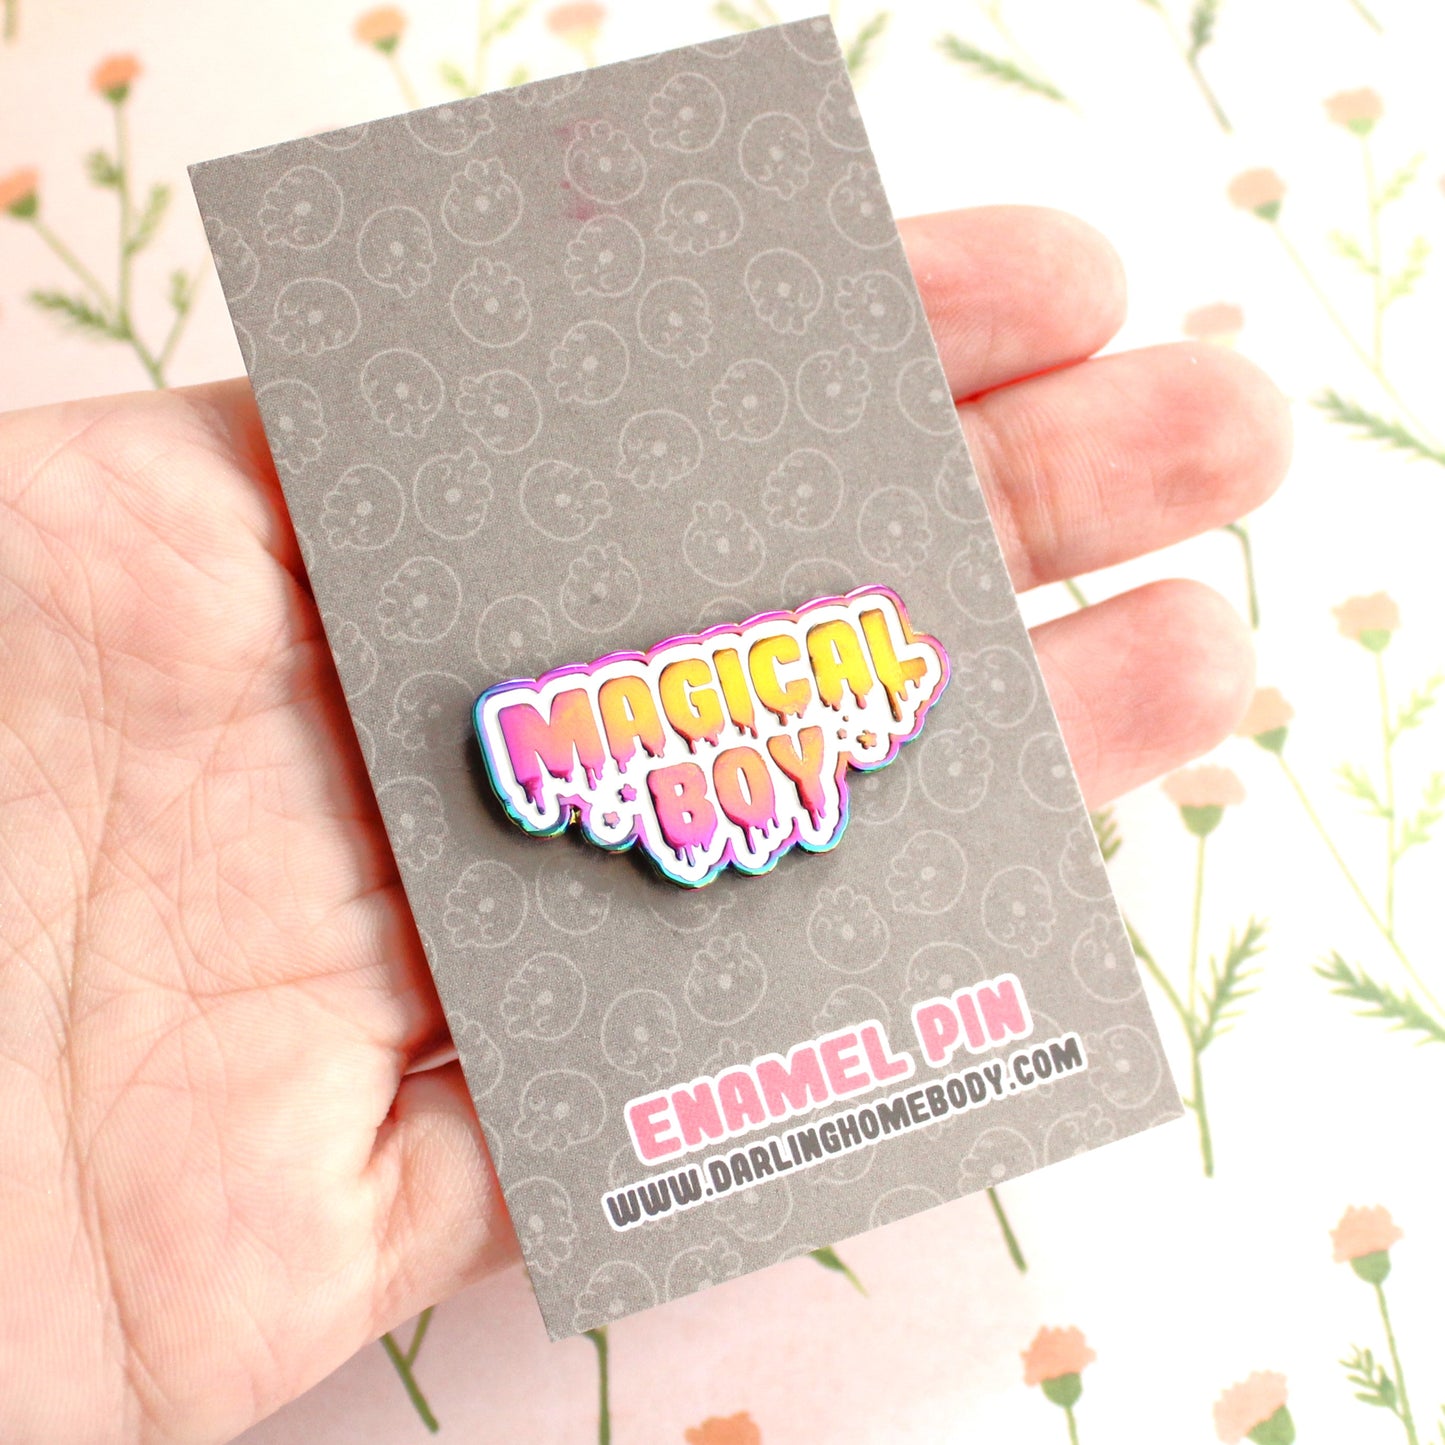 Magical Boy Rainbow Metal Enamel Pin. Drippy Lapel Pin. Kawaii Sailor Moon Gift. Cute and Creepy Aesthetic Pin. Steven Universe. Madoka Magica.